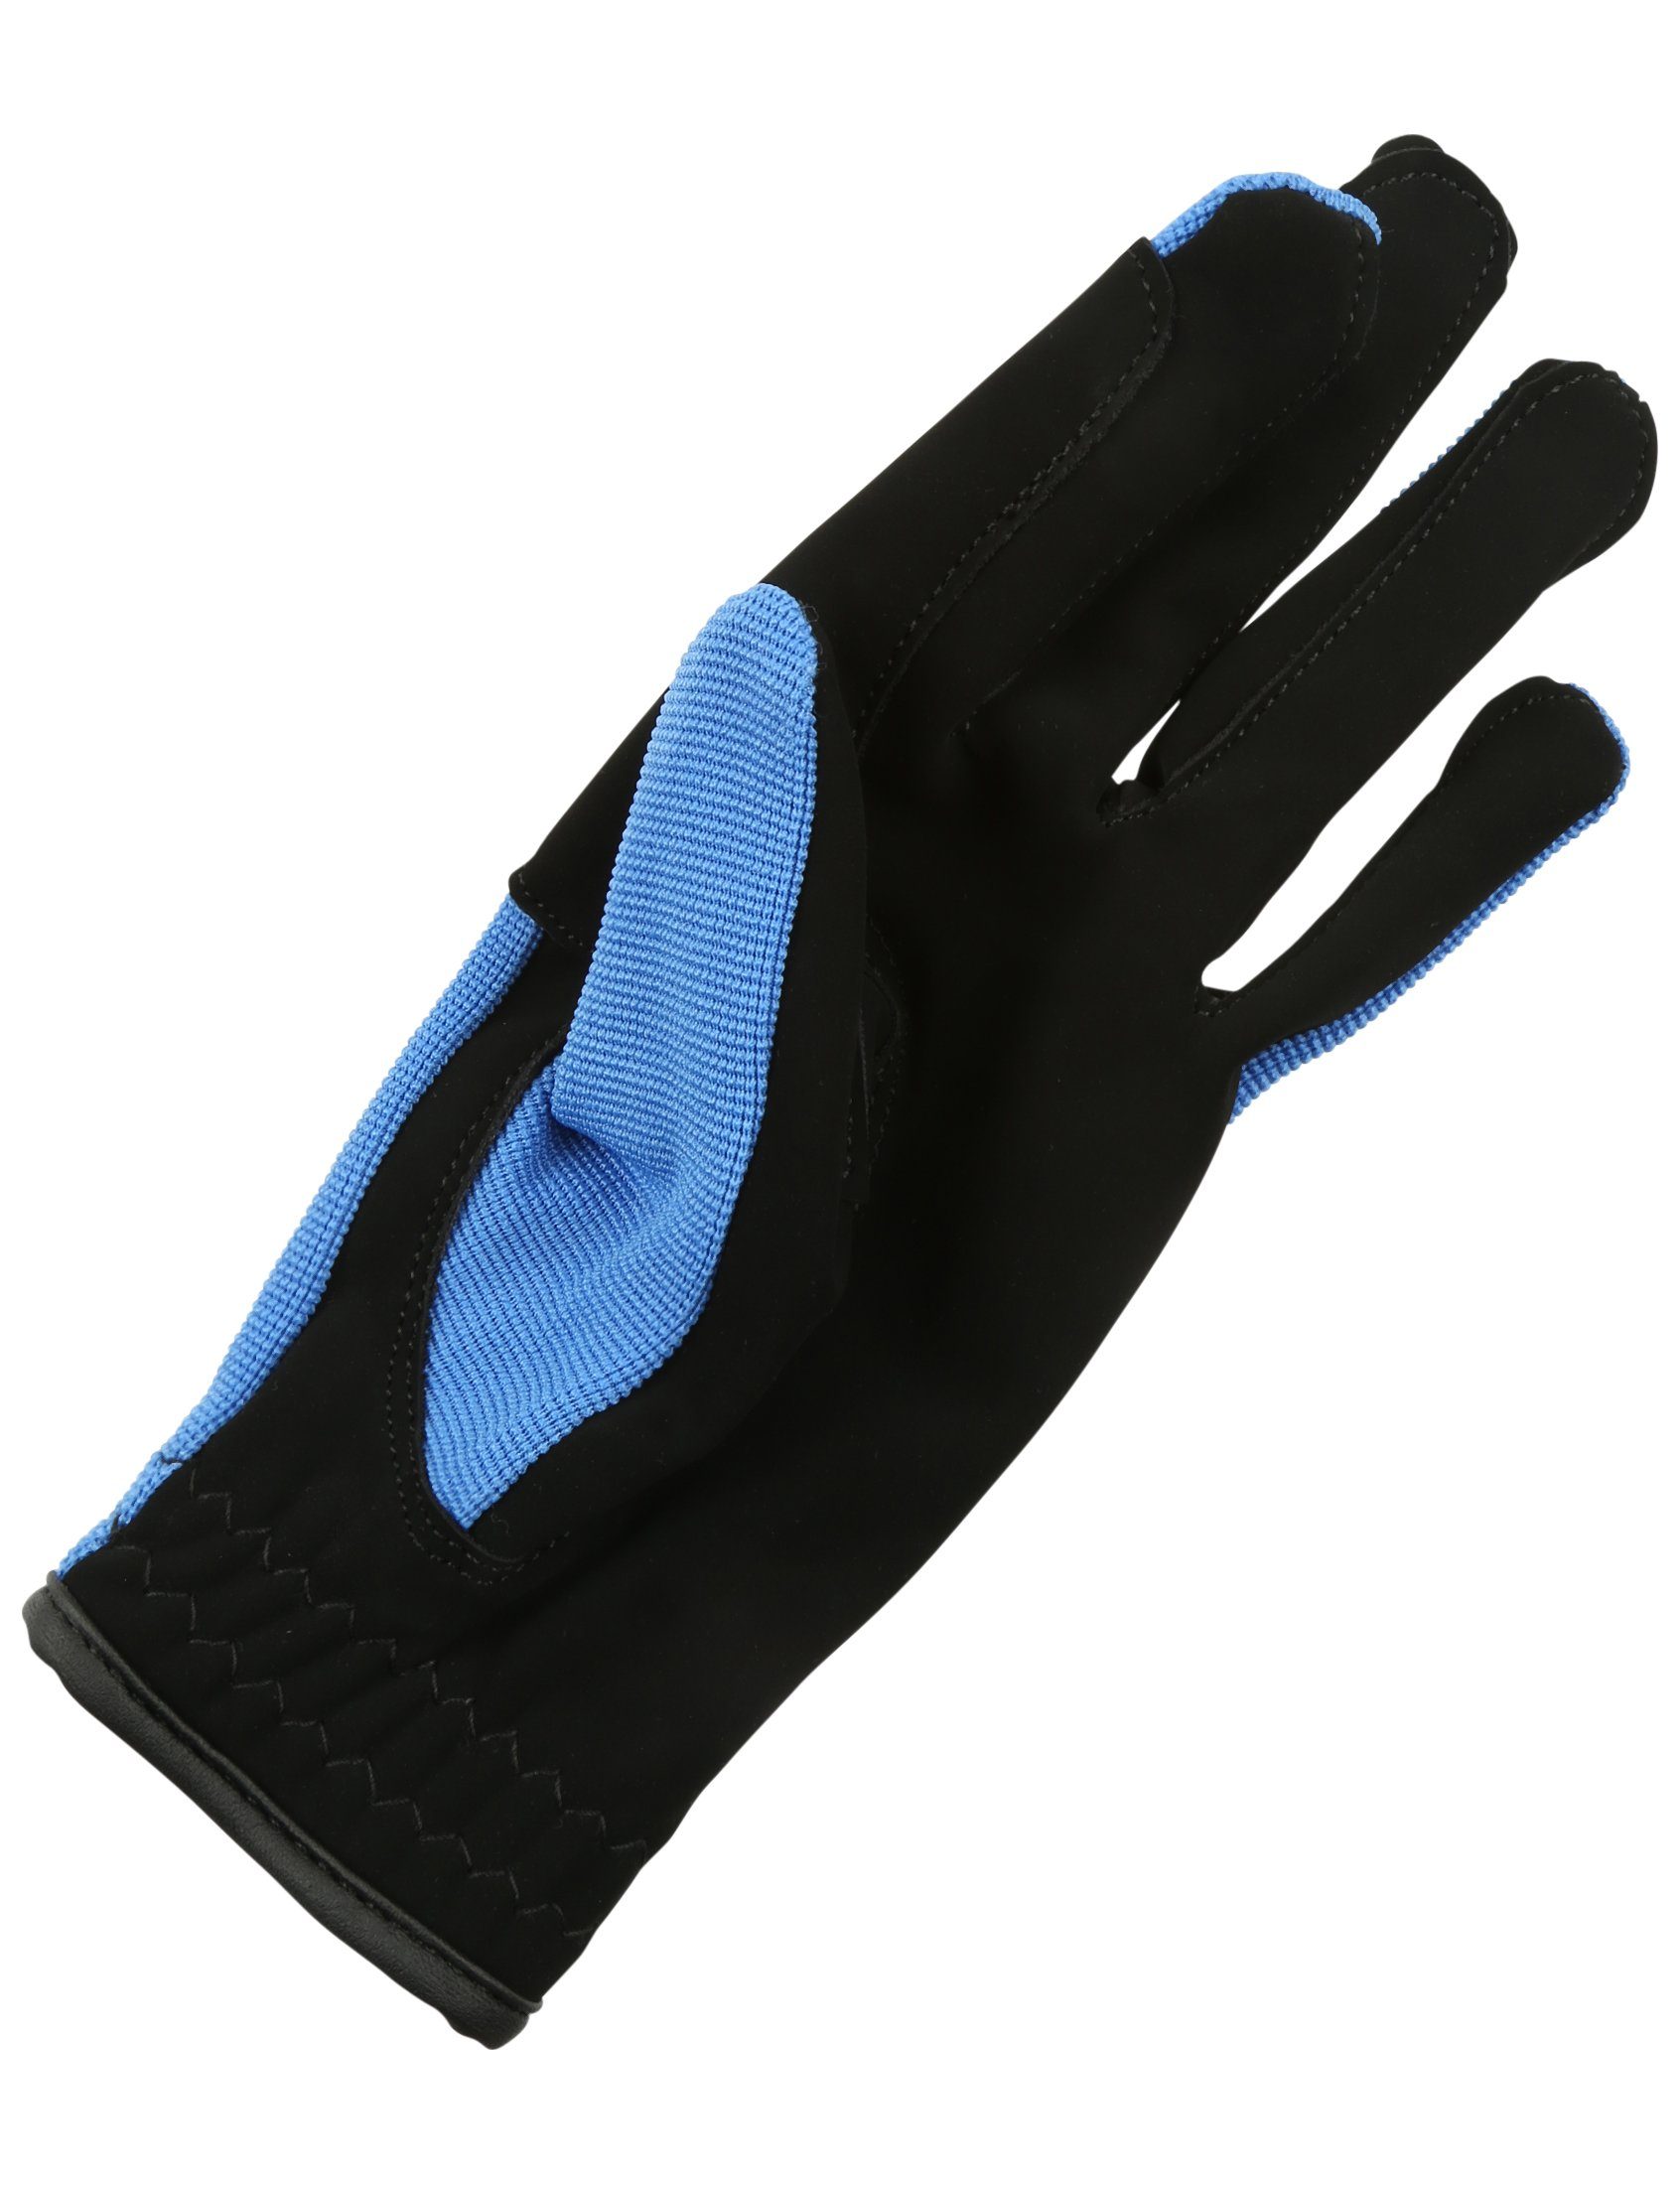 Handschuhe Royal material Damen the pleasantly Fleecehandschuhe REIT thin Blau is Gloves Zoomyo